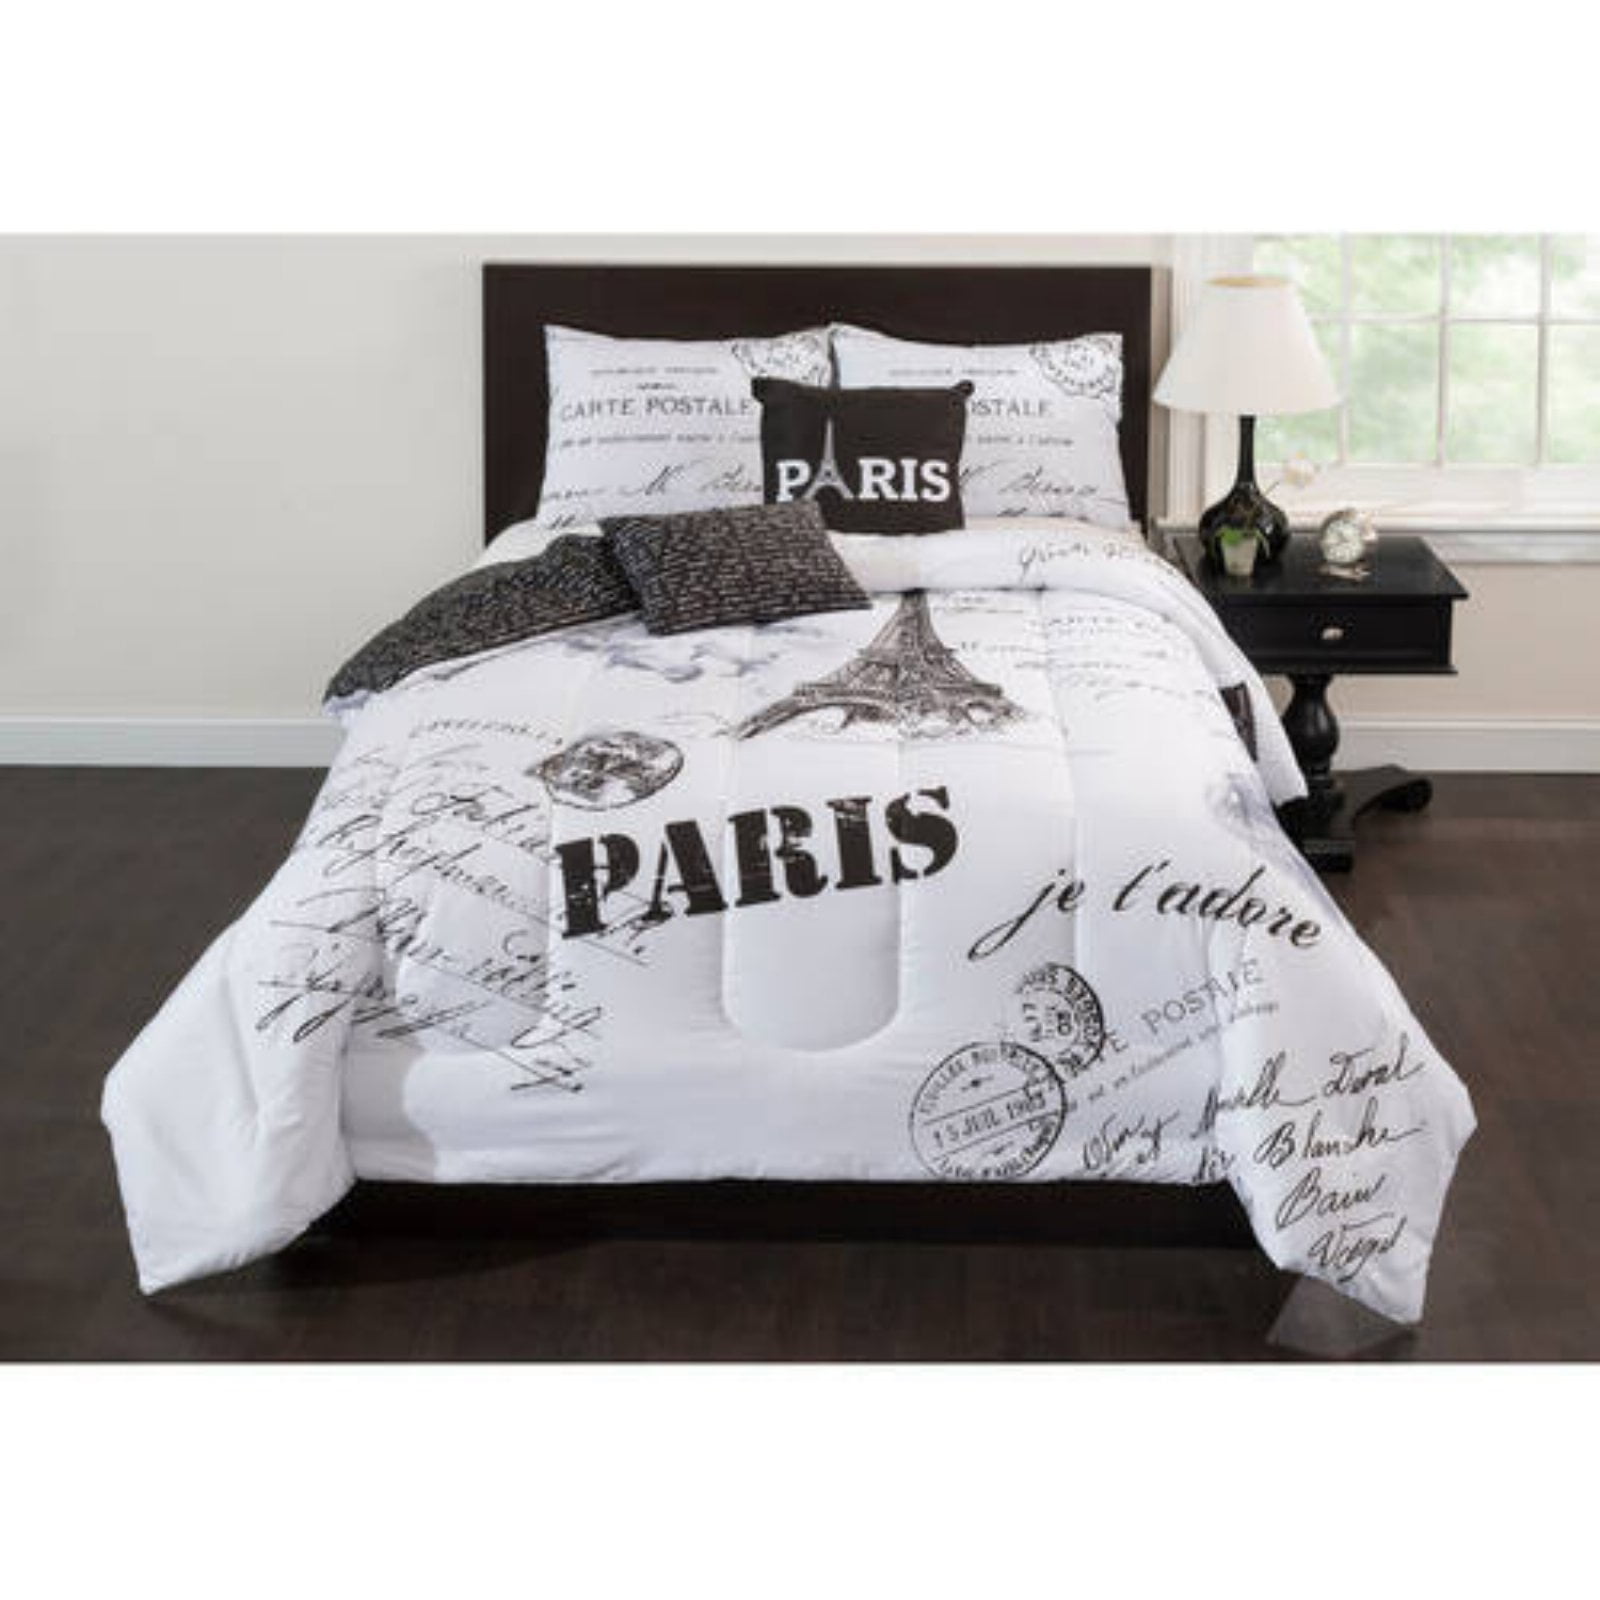 Bedding Queen 5 Piece Girls Comforter Bed Set, Paris Eiffel Tower 